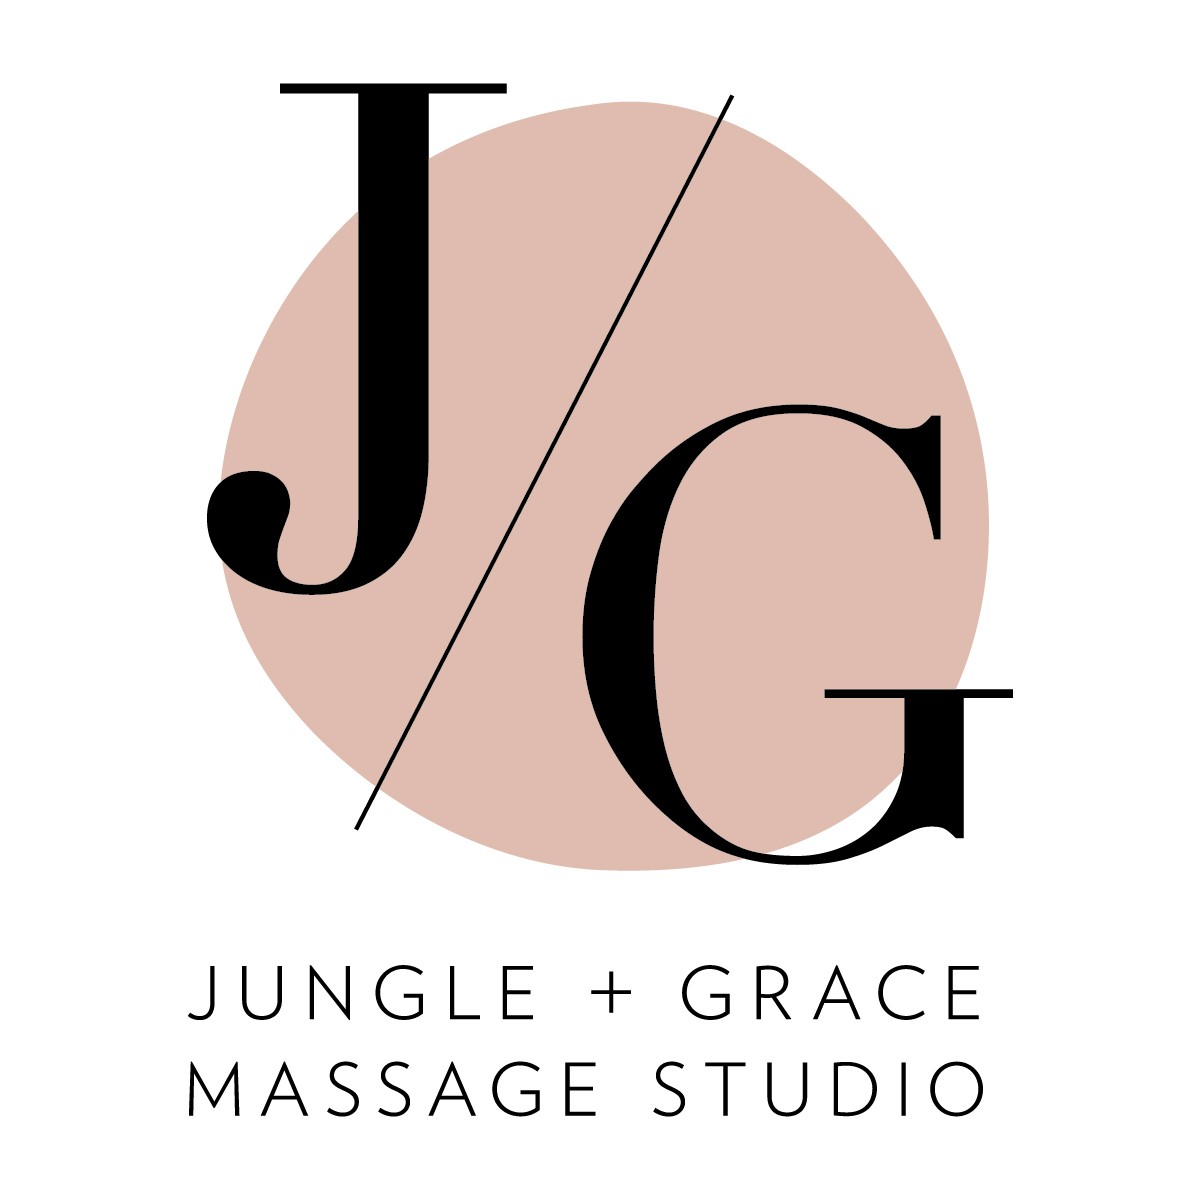 Jungle + Grace Massage Studio